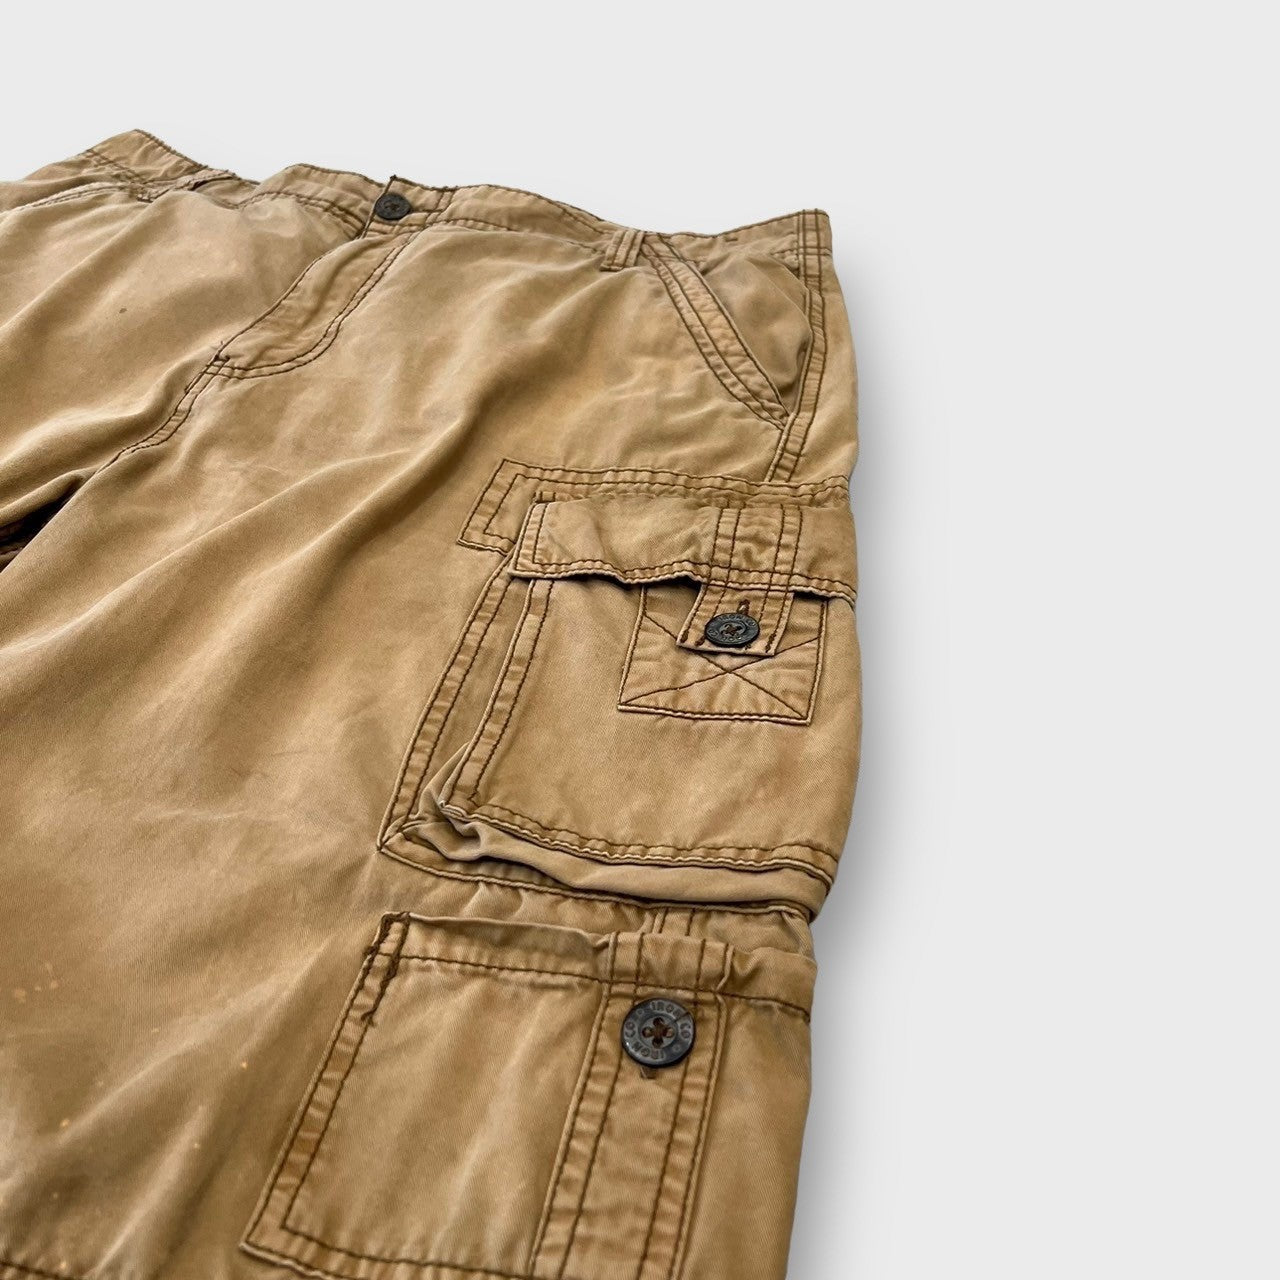 90's "IRON Co."
Cargo half pants